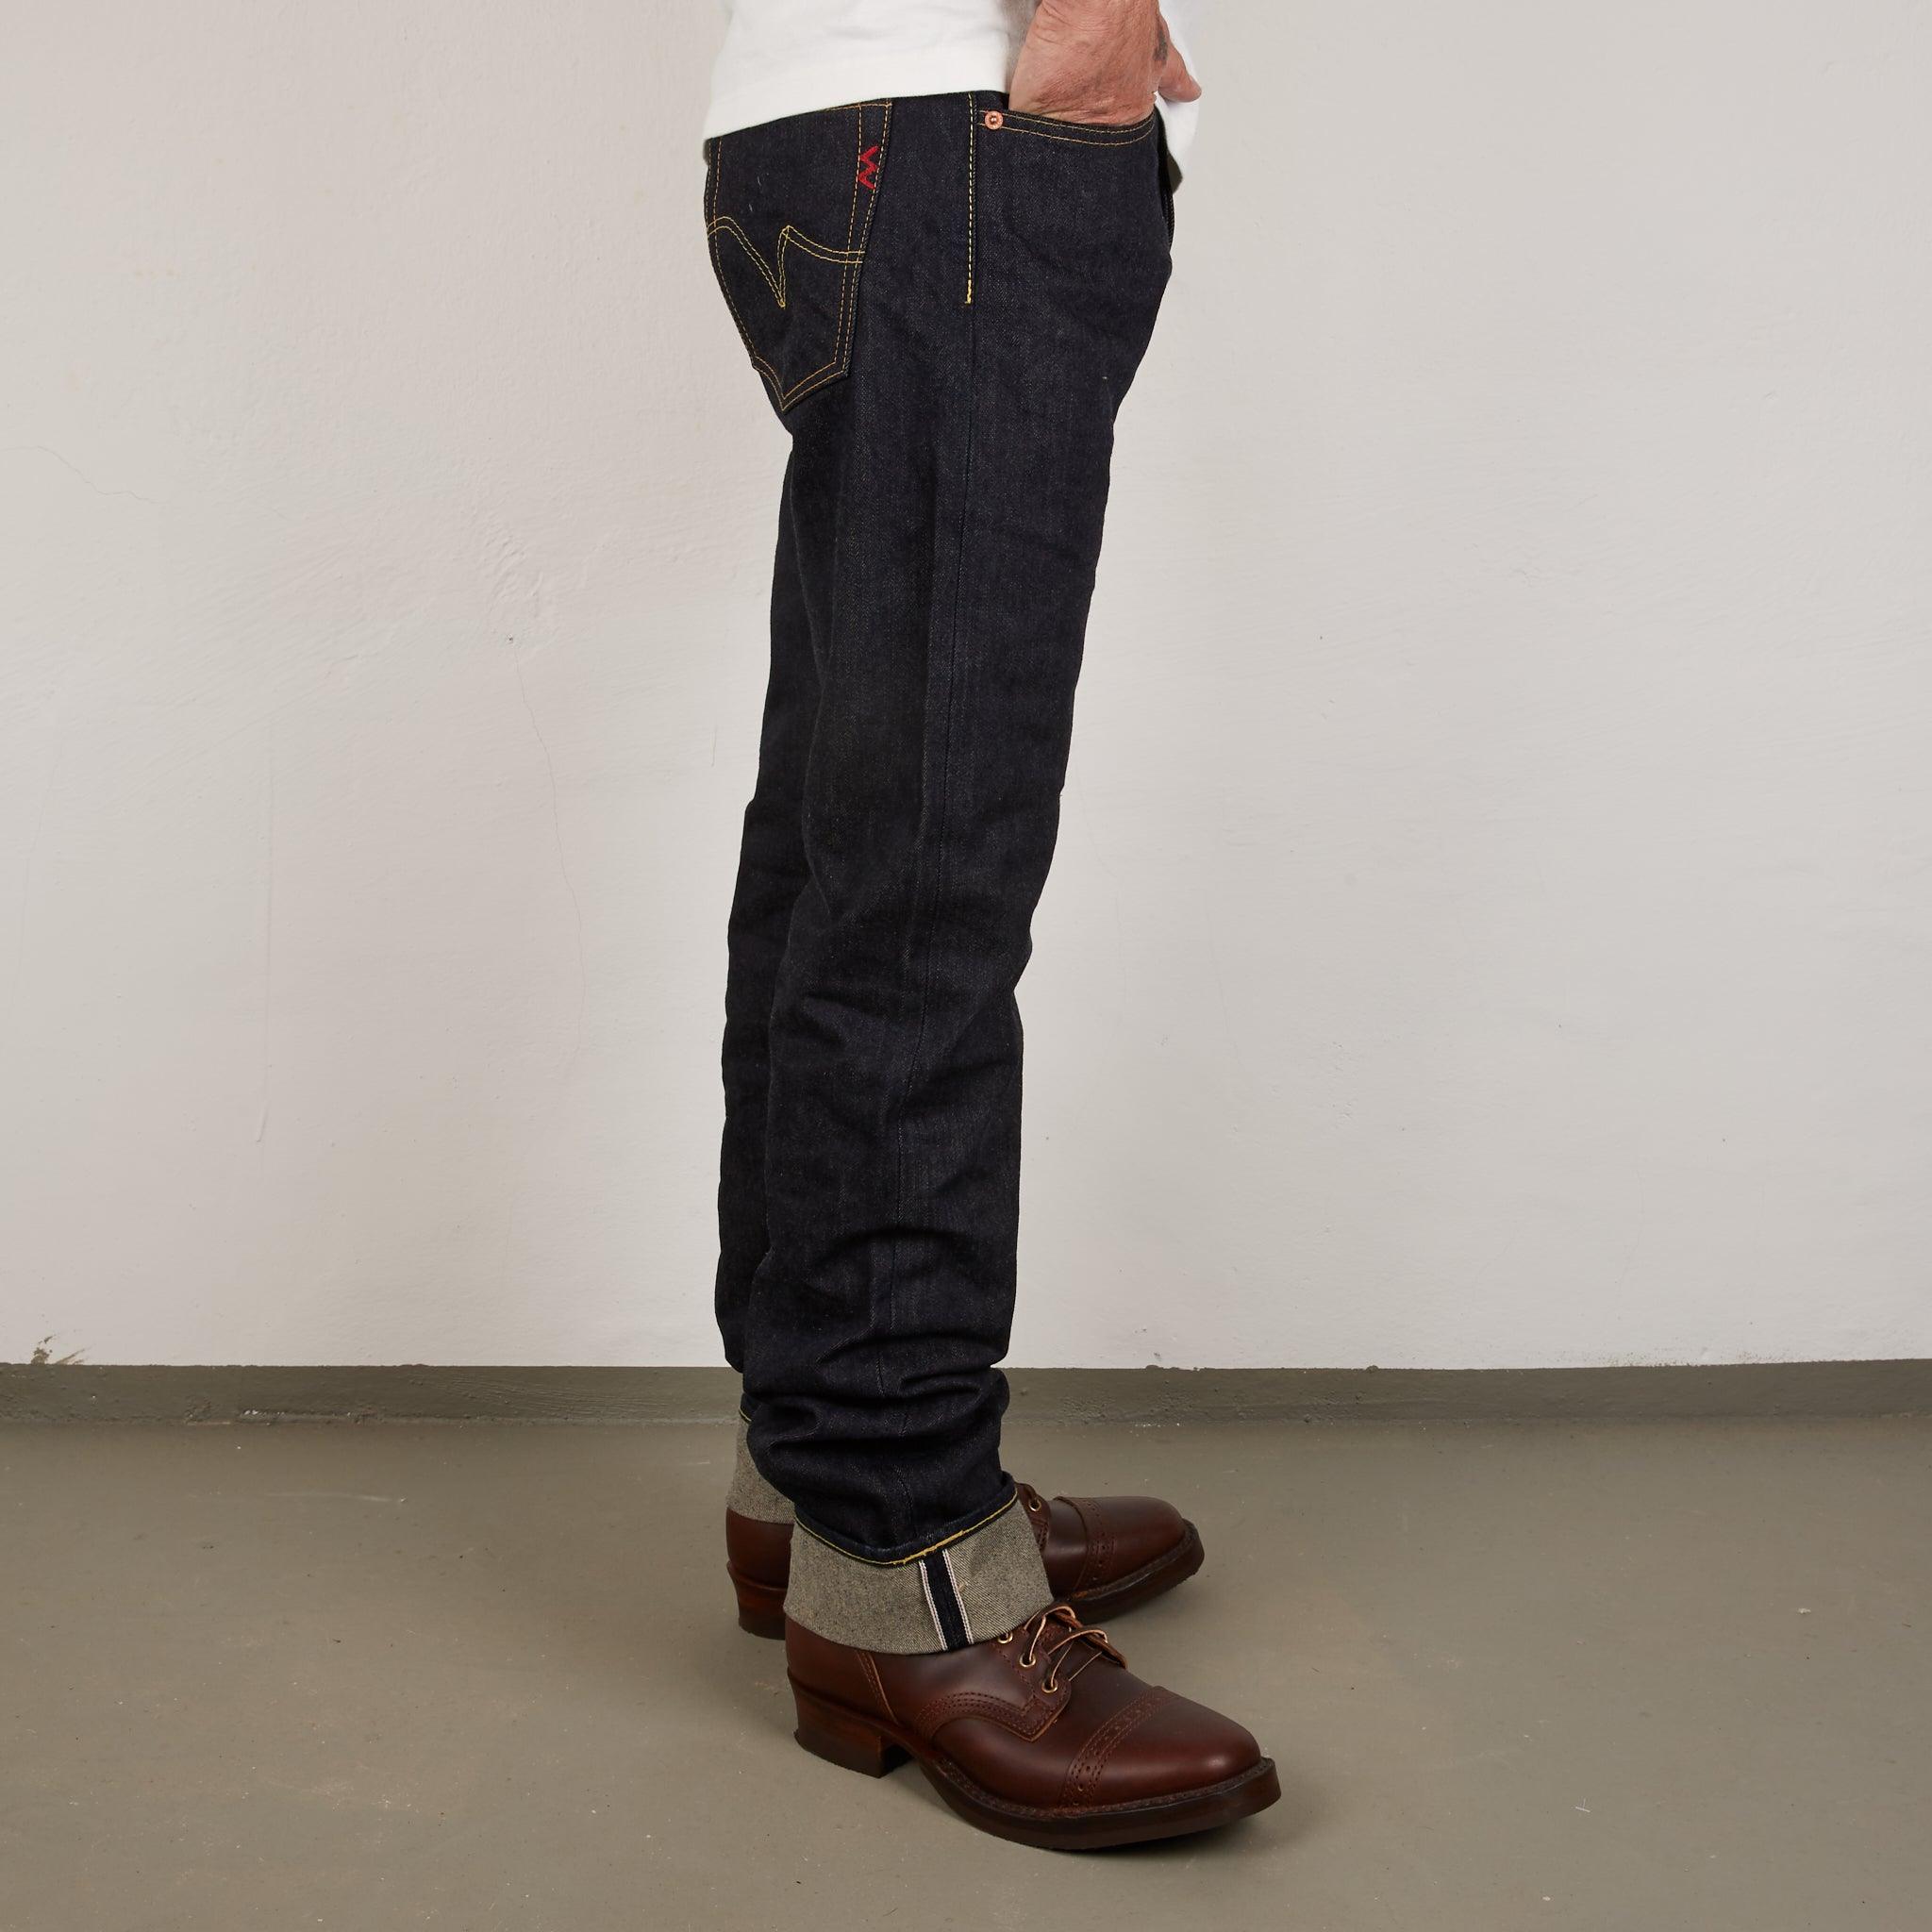 IH-666S-142 - 14oz Selvedge Denim Slim Straight Cut Jeans - Indigo